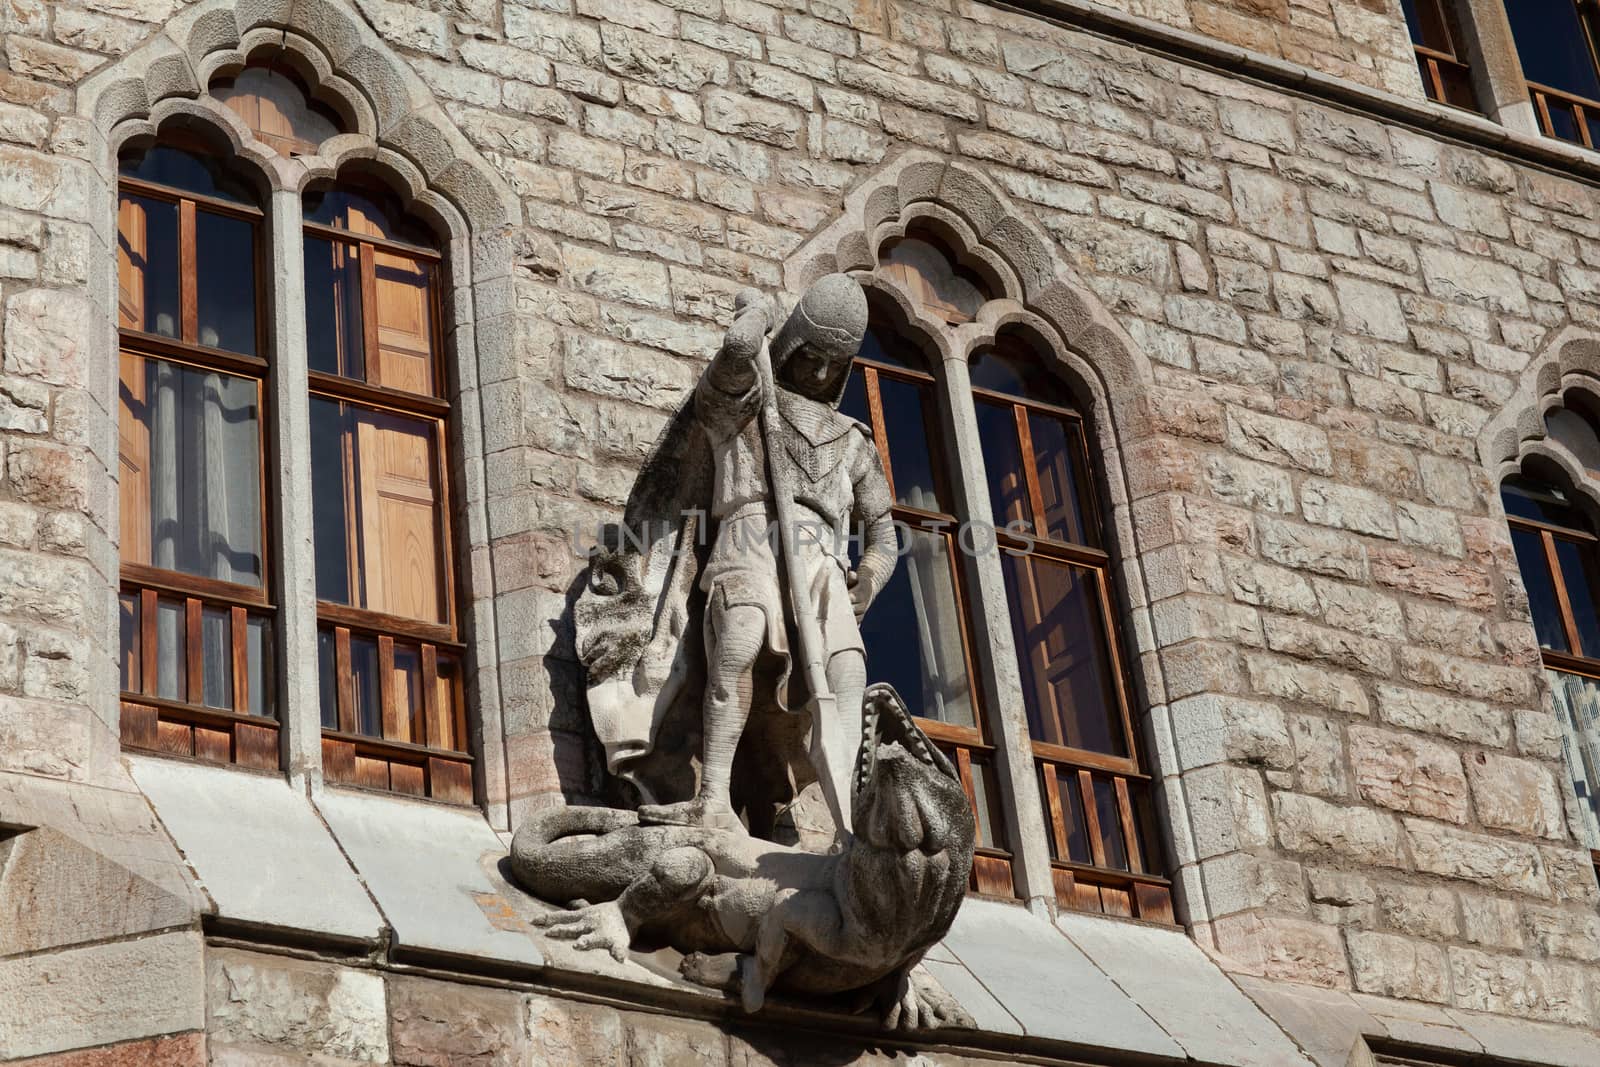 Saint George statue, Casa Botines, Leon, Spain by vlad-m